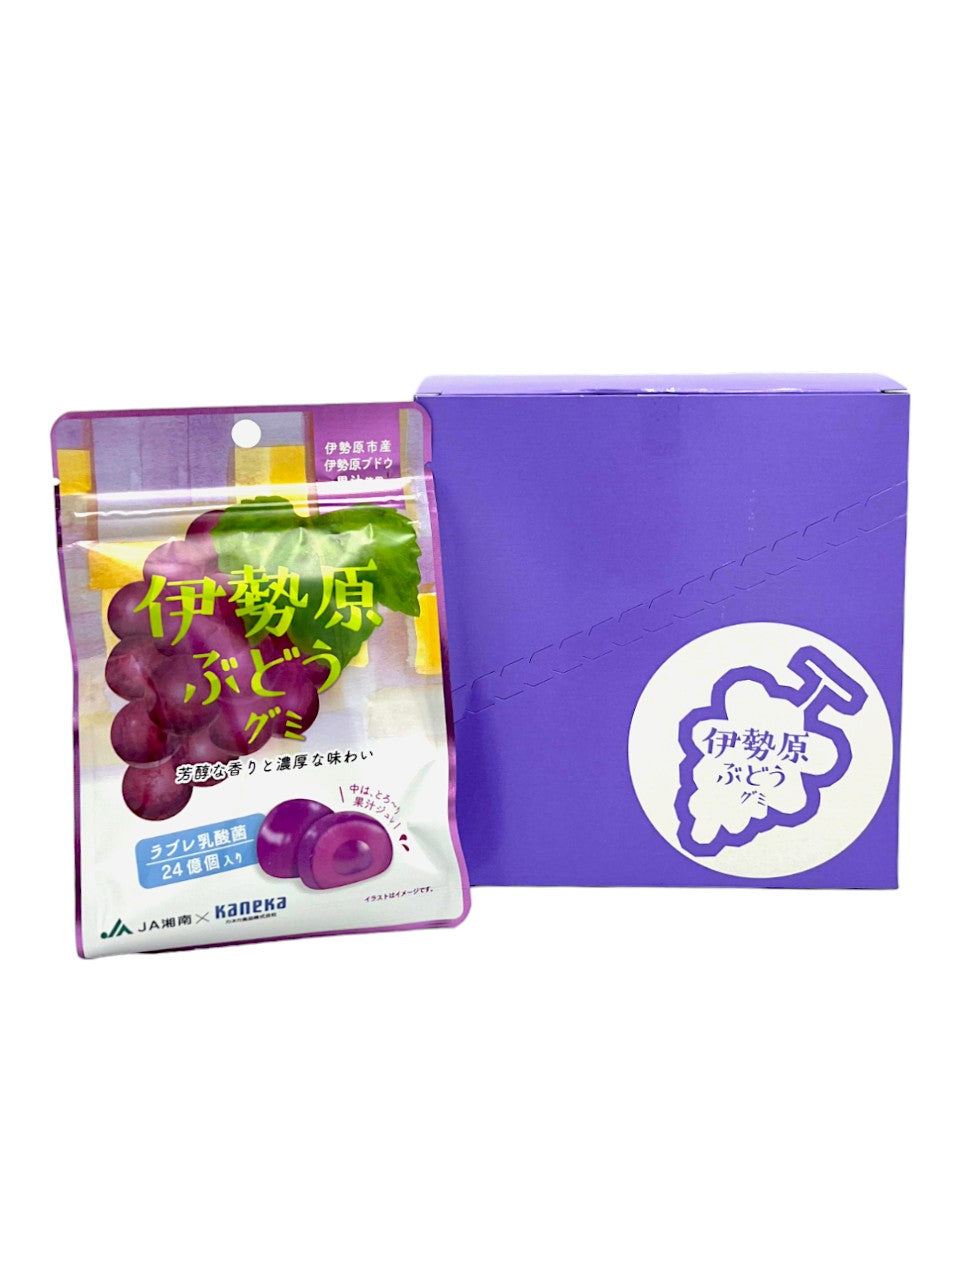 Kaneka Isehara Grape Gummy pack of 10 (Japan)